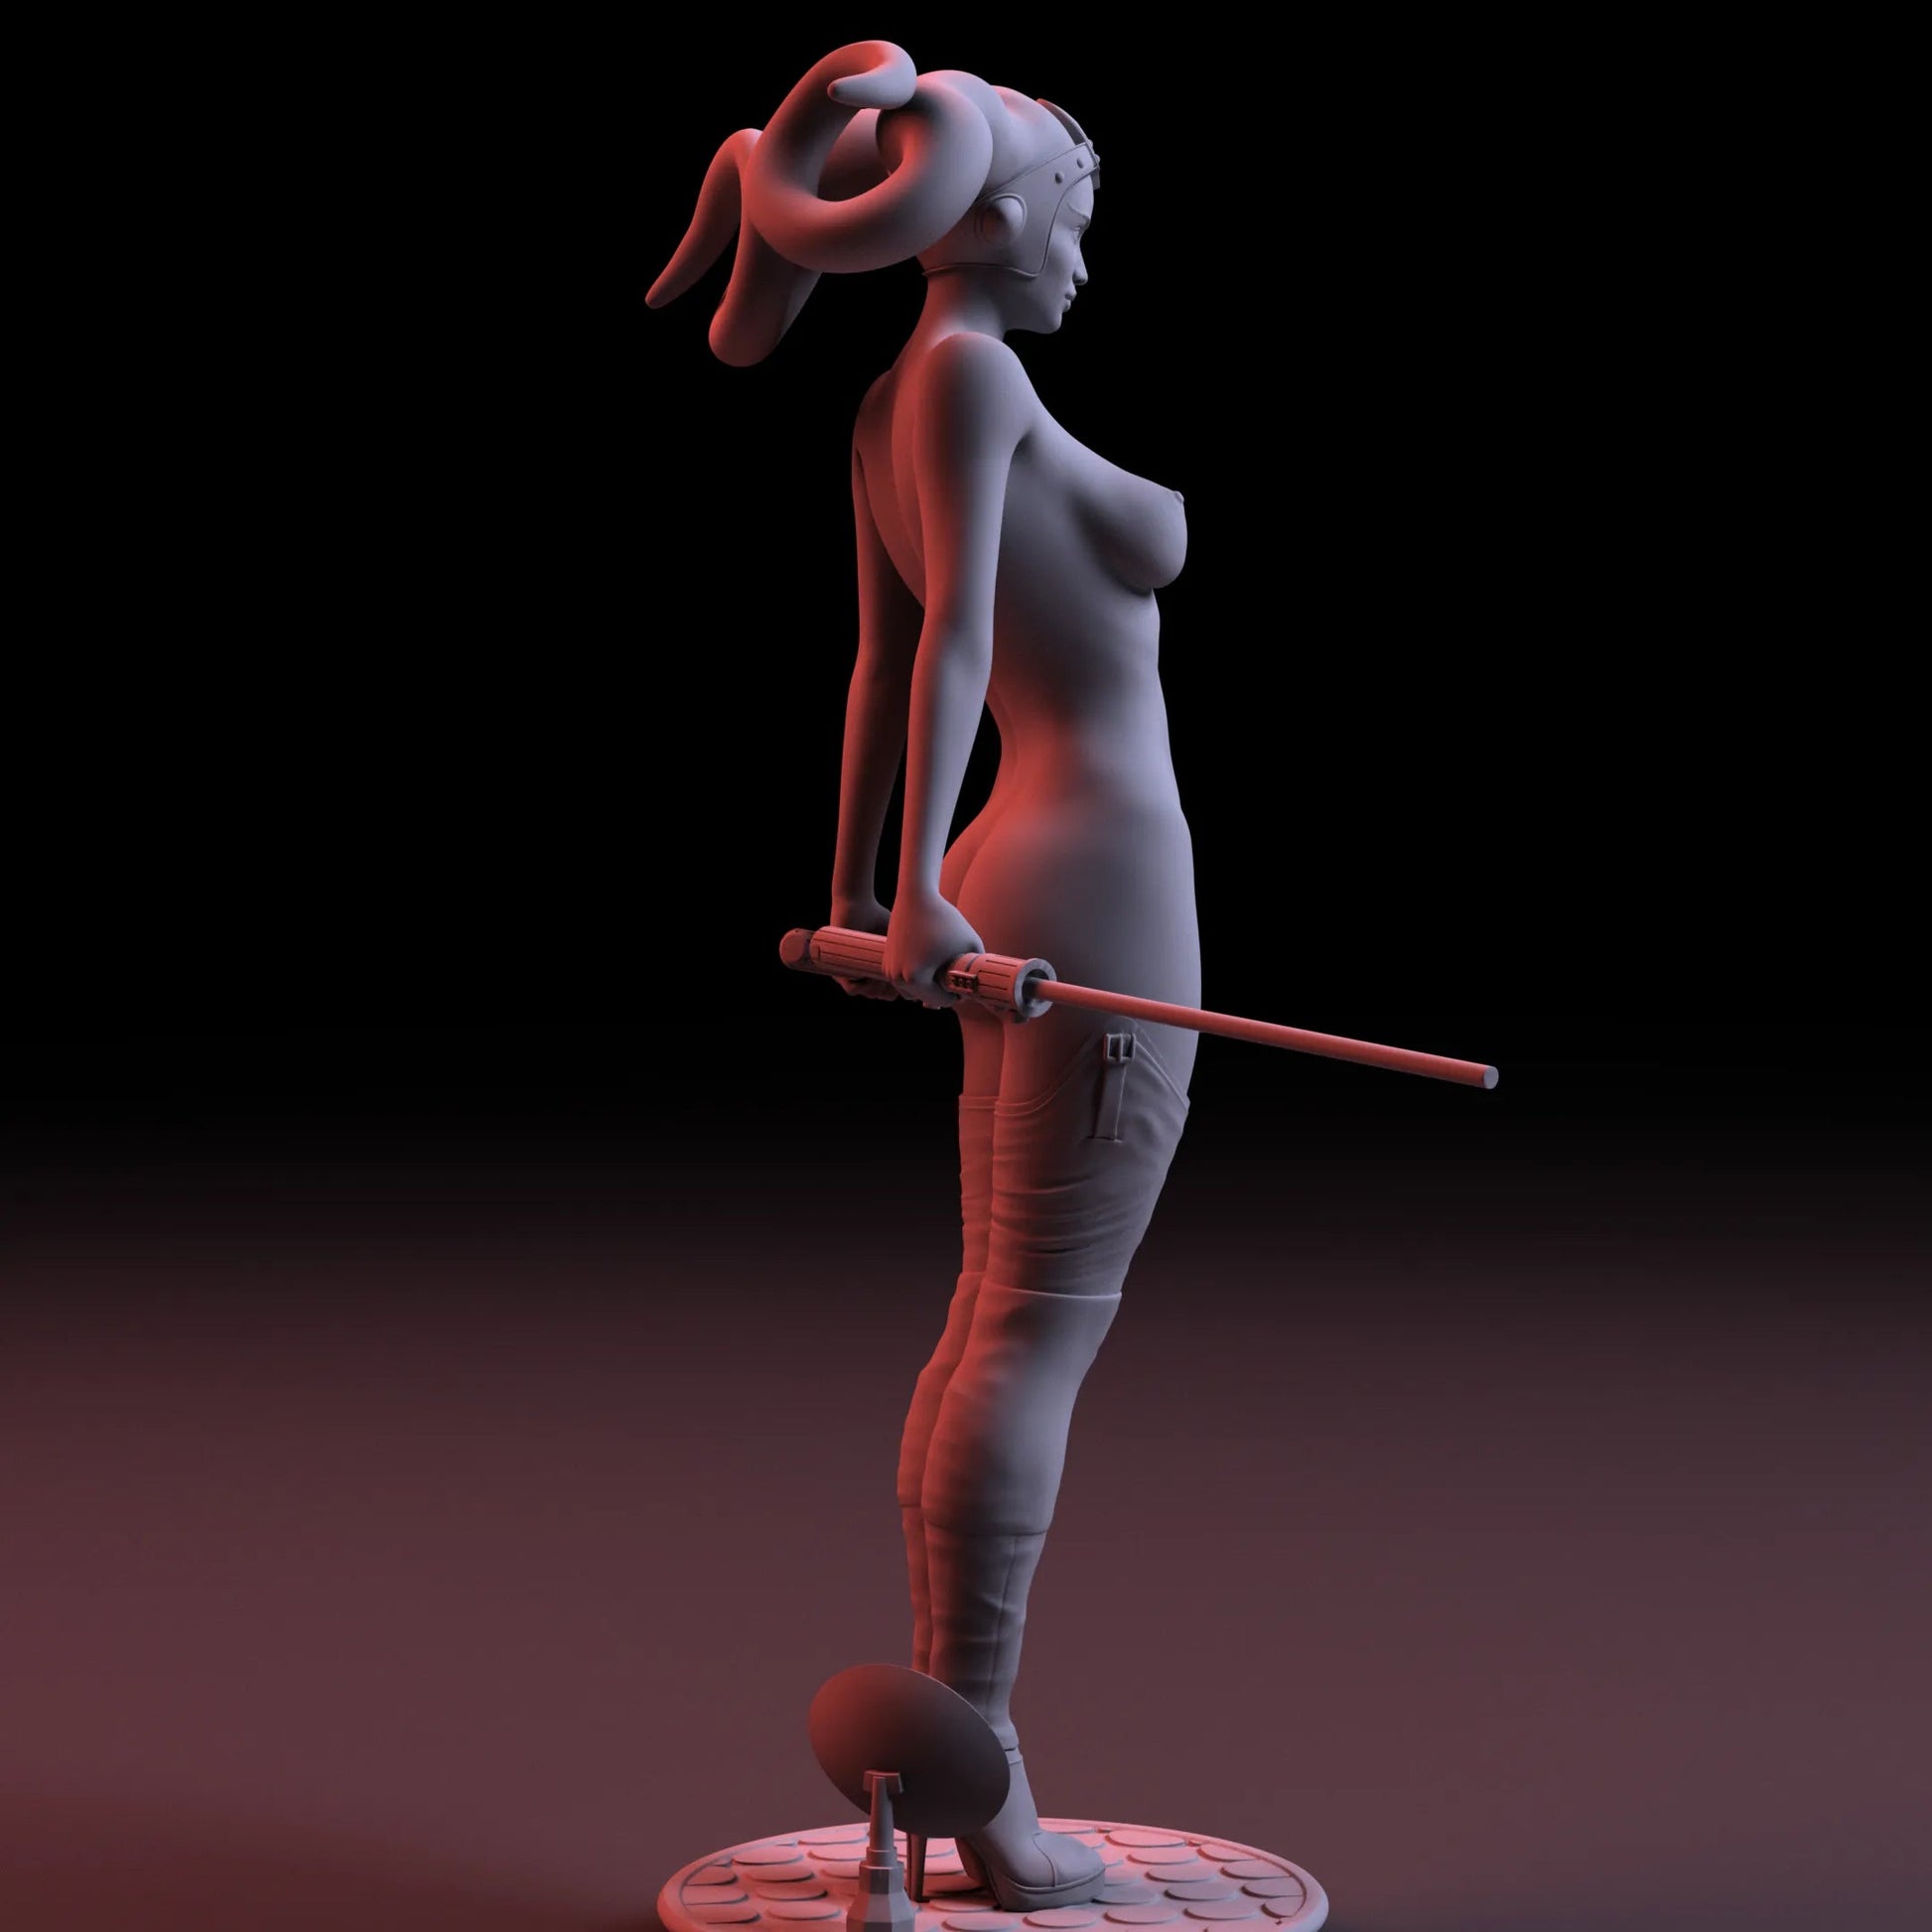 Twi'lek | 3D Printed | Fanart | Unpainted | NSFW Version | Figurine | Figure | Miniature | Sexy |